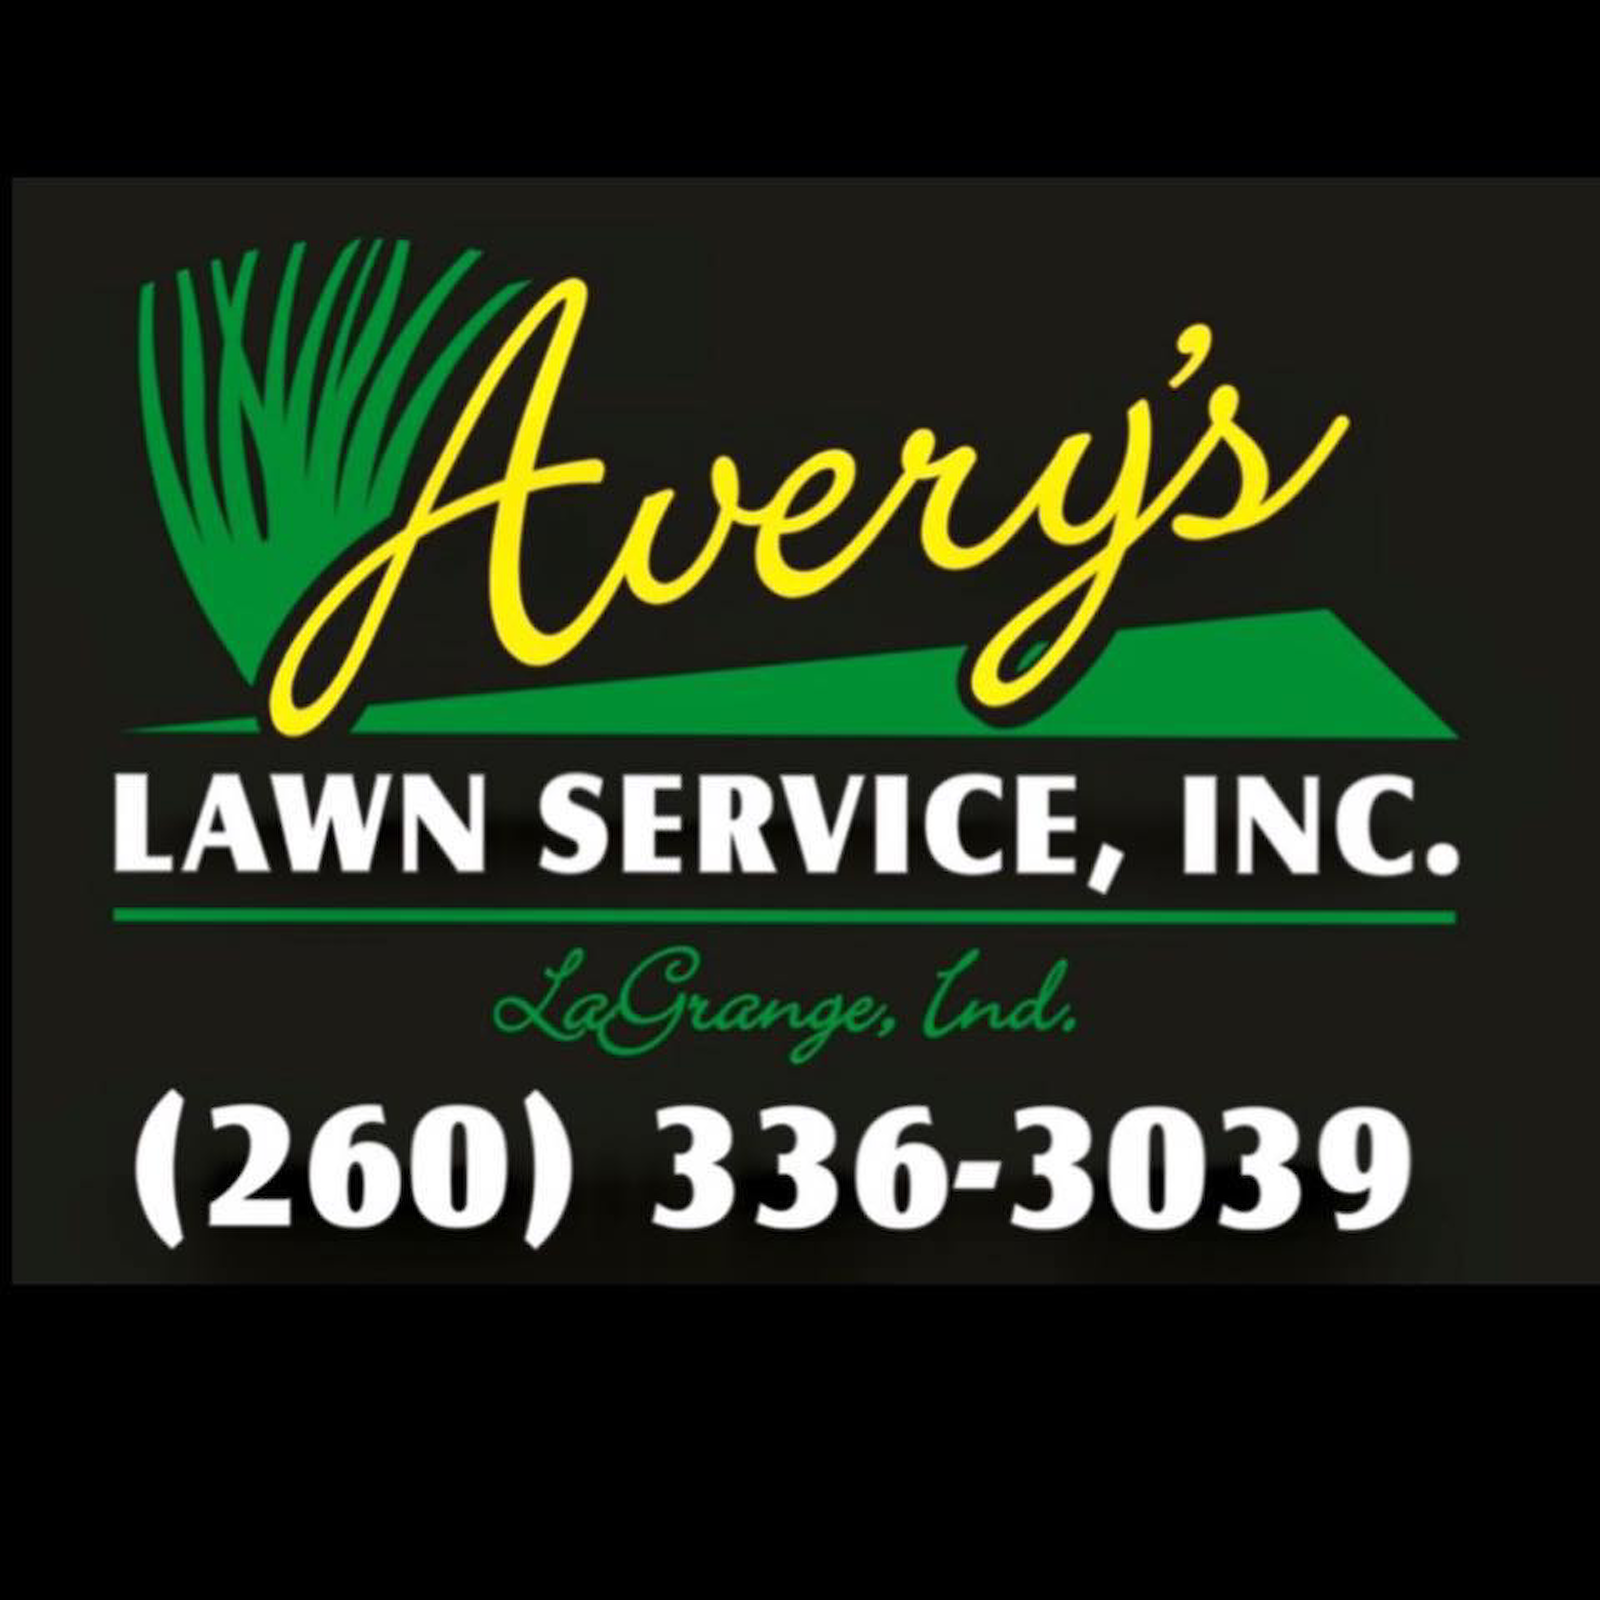 Avery's Lawn Service, Inc.